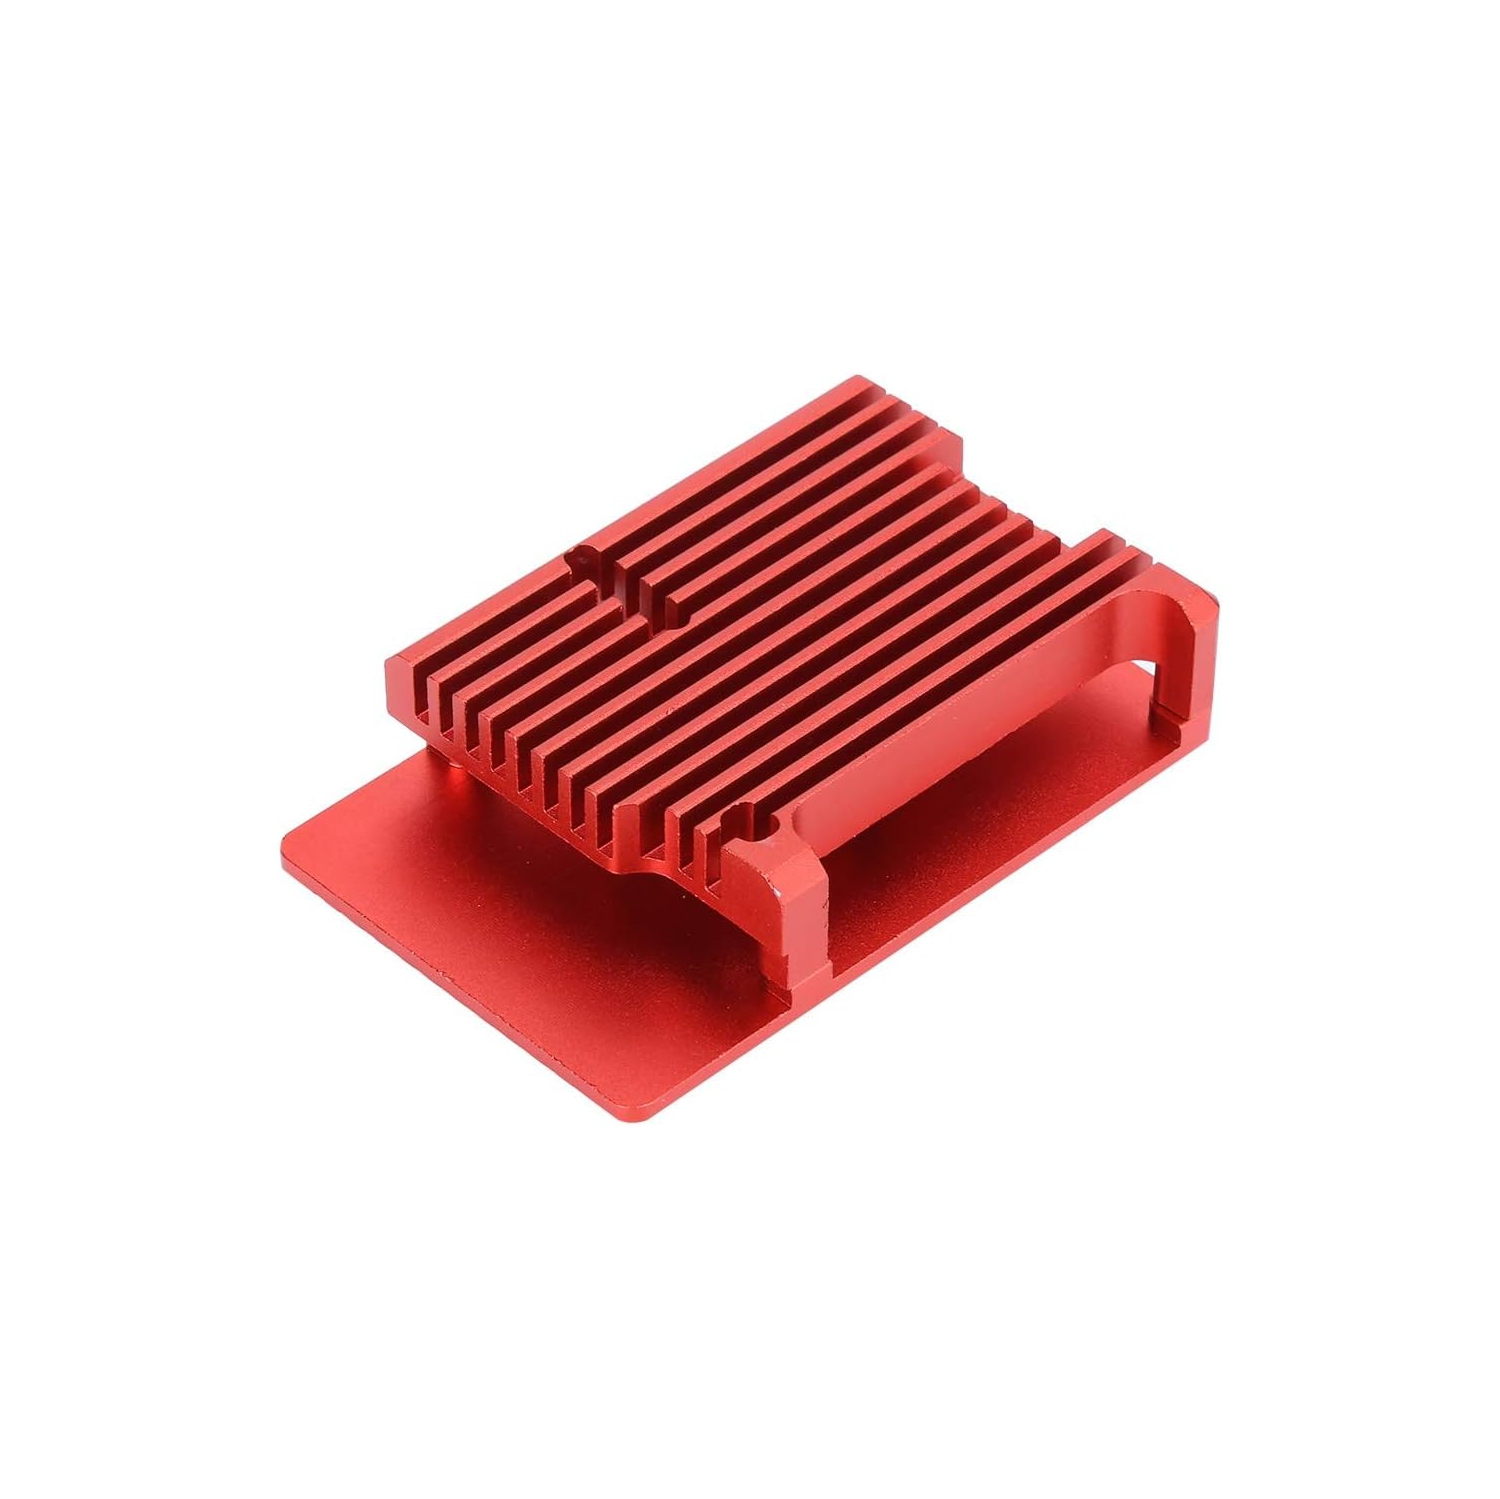 for Raspberry Pi 4B+ Case, CNC Aluminum Alloy Case Cover for Raspberry Pi 4 Computer Model B, Built-in Heat Column, Red